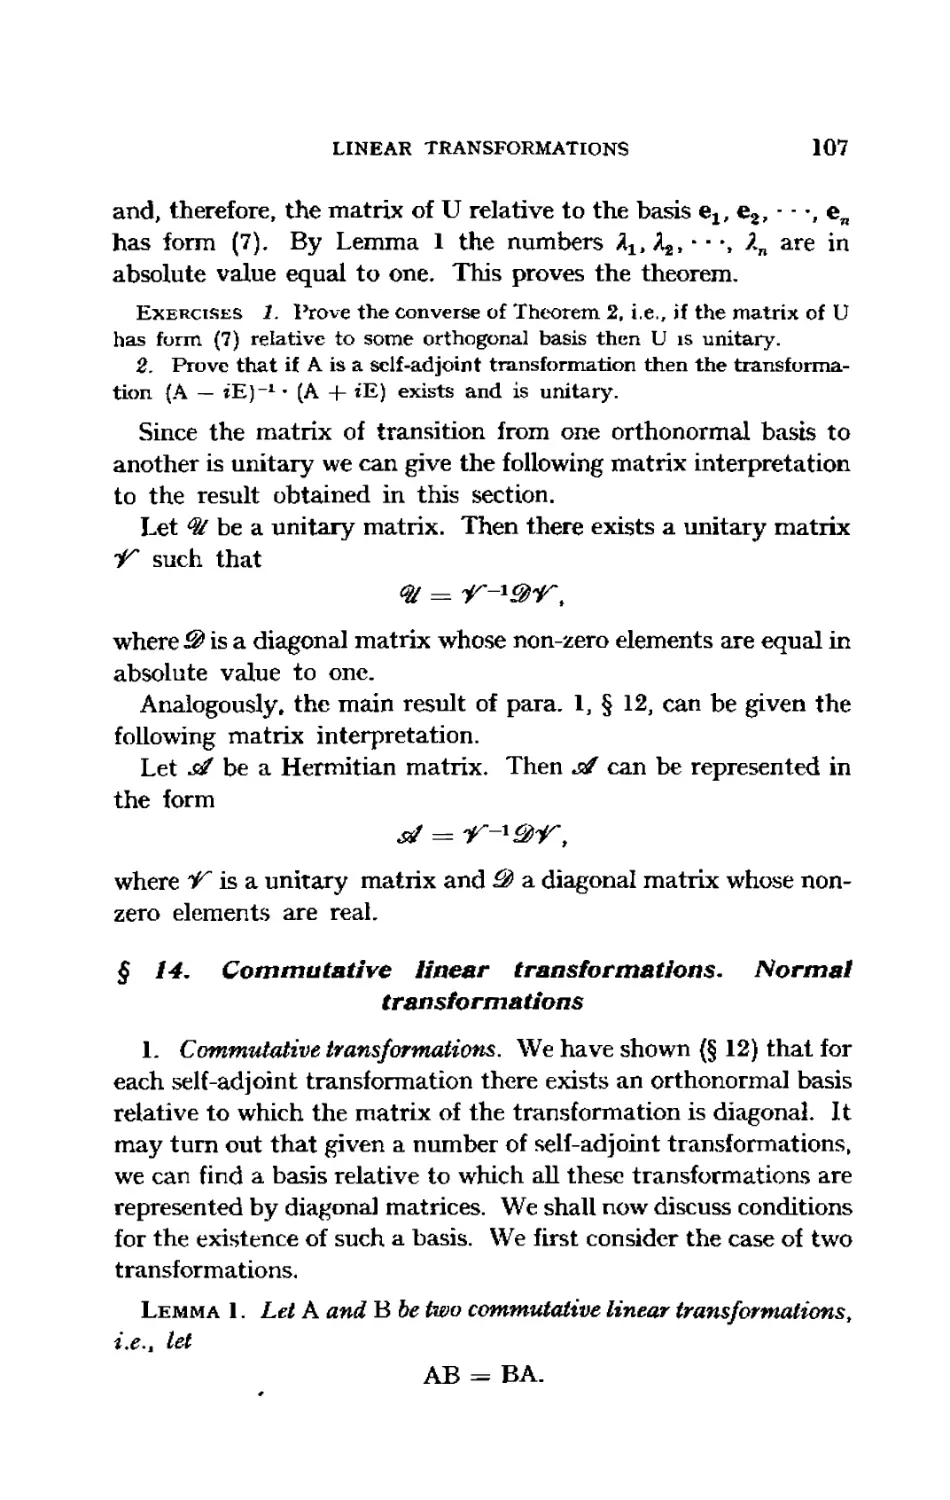 §14. Commutative linear transformations. Normal transformations